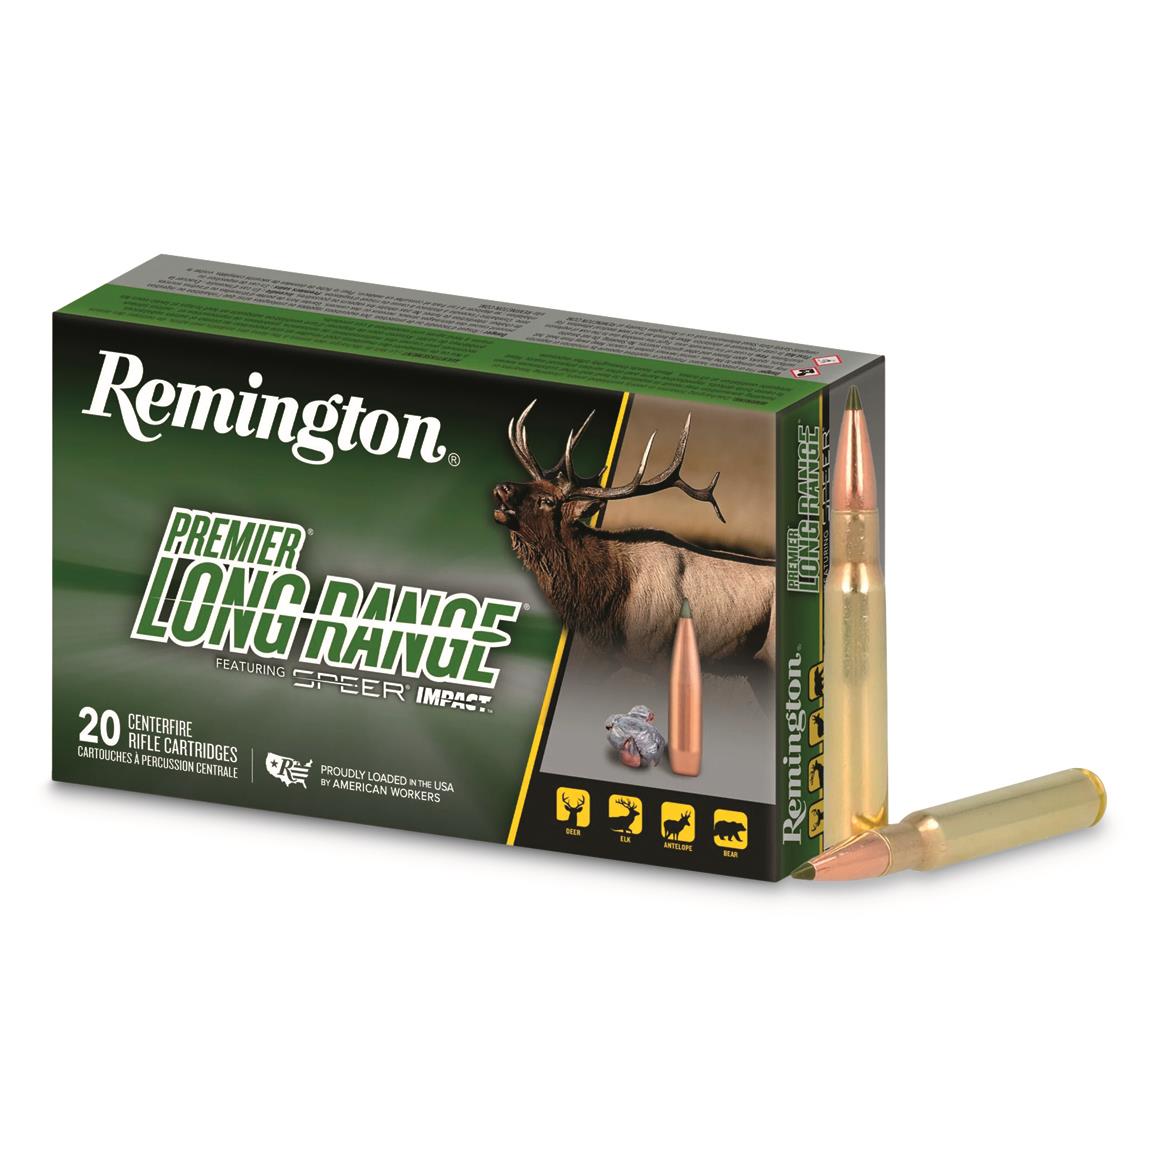 Remington Premier Long Range, .30-06 Springfield, Speer Impact, 172 Grain, 20 Rounds